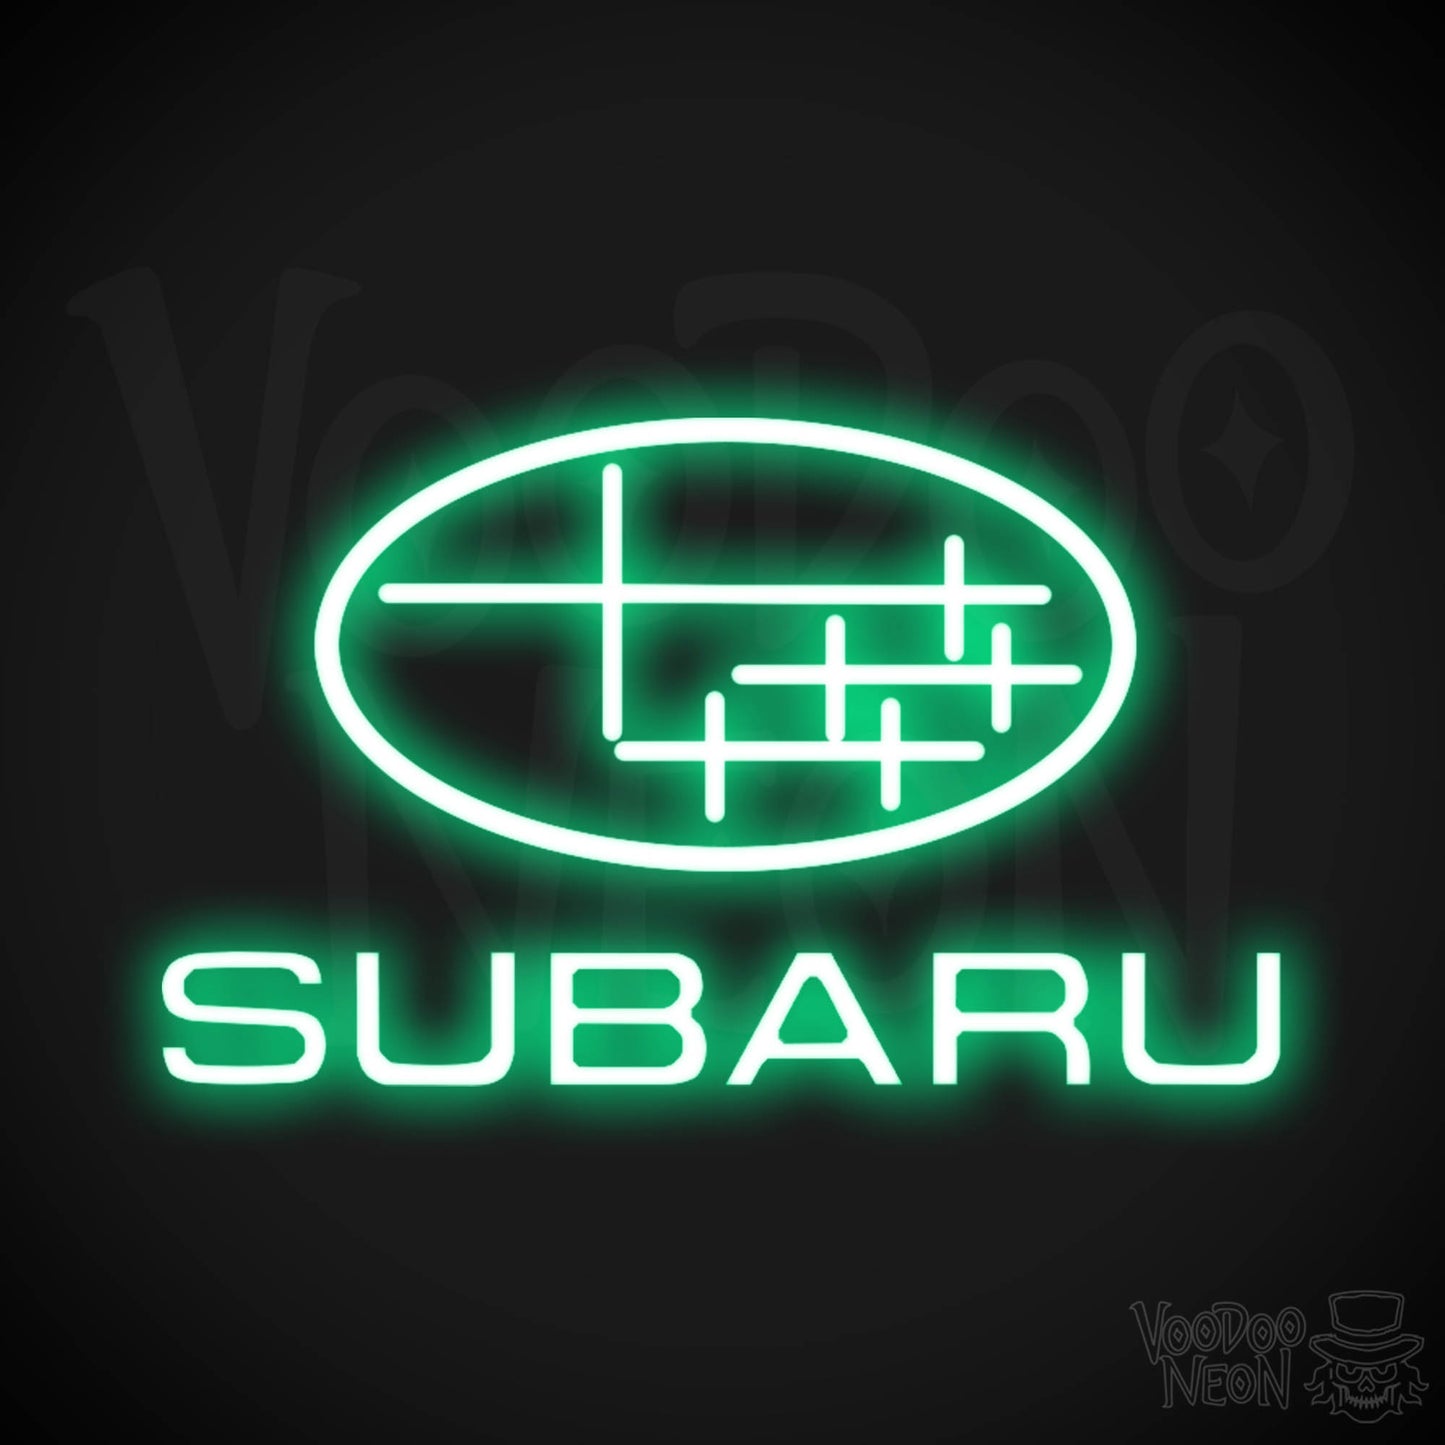 Subaru Neon Sign - Subaru Sign - Subaru Decor - Wall Art - Color Green